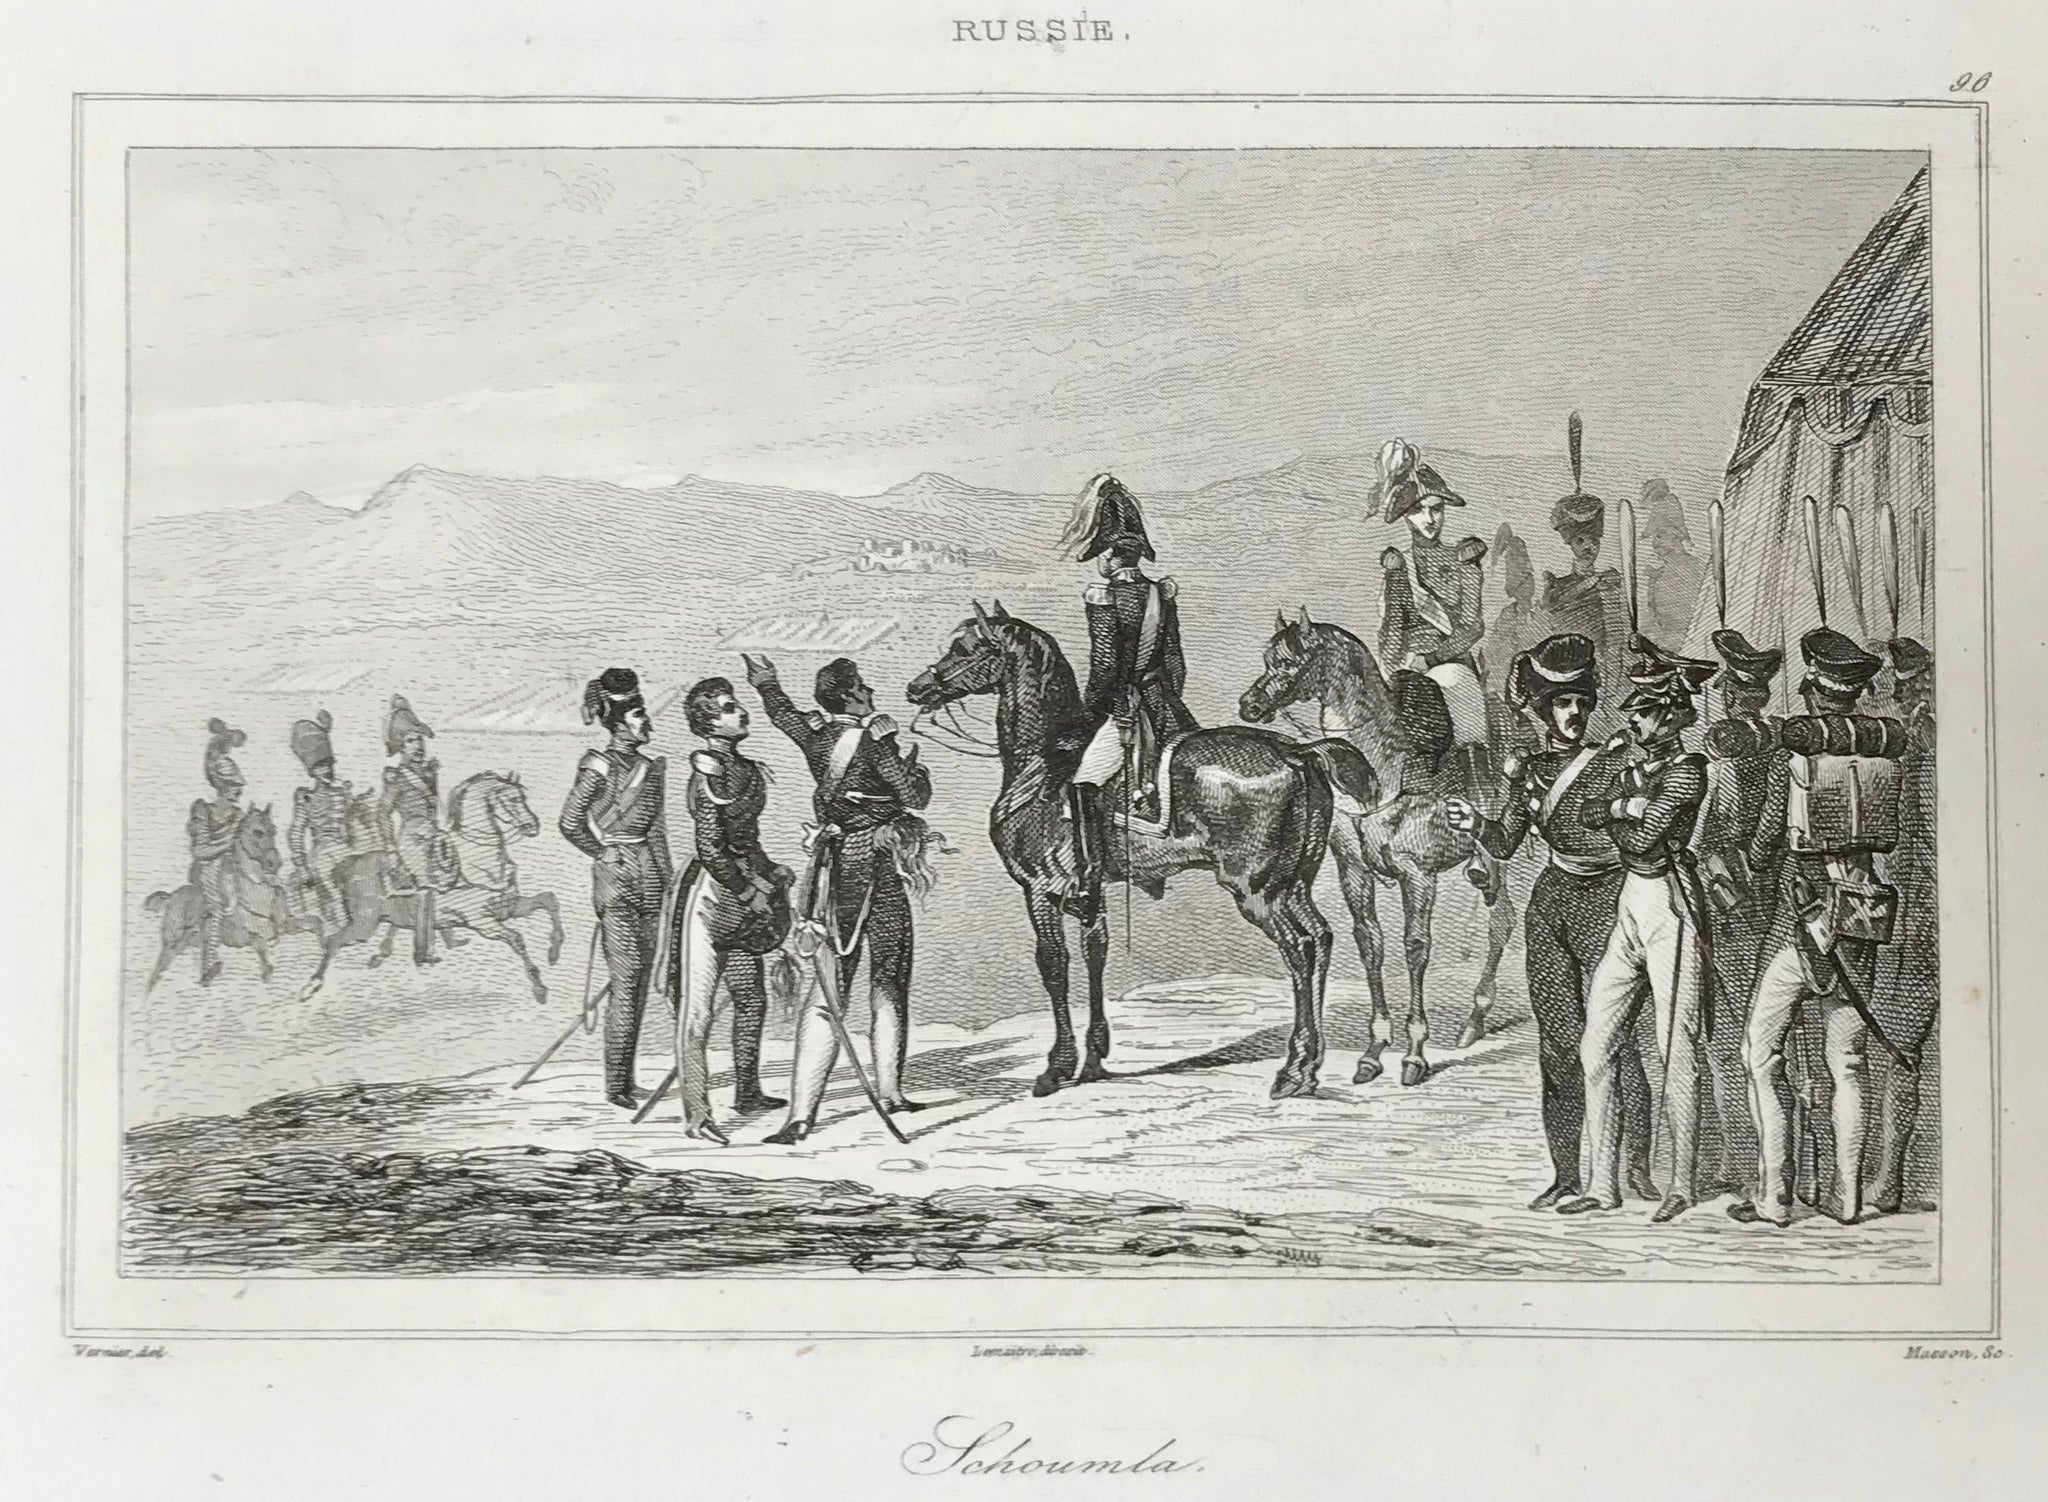 Russia, "Schoumla" (Schumla, Bulgaria)  Russian army near Schumla, Bulgaria. Steel engraving 1838.